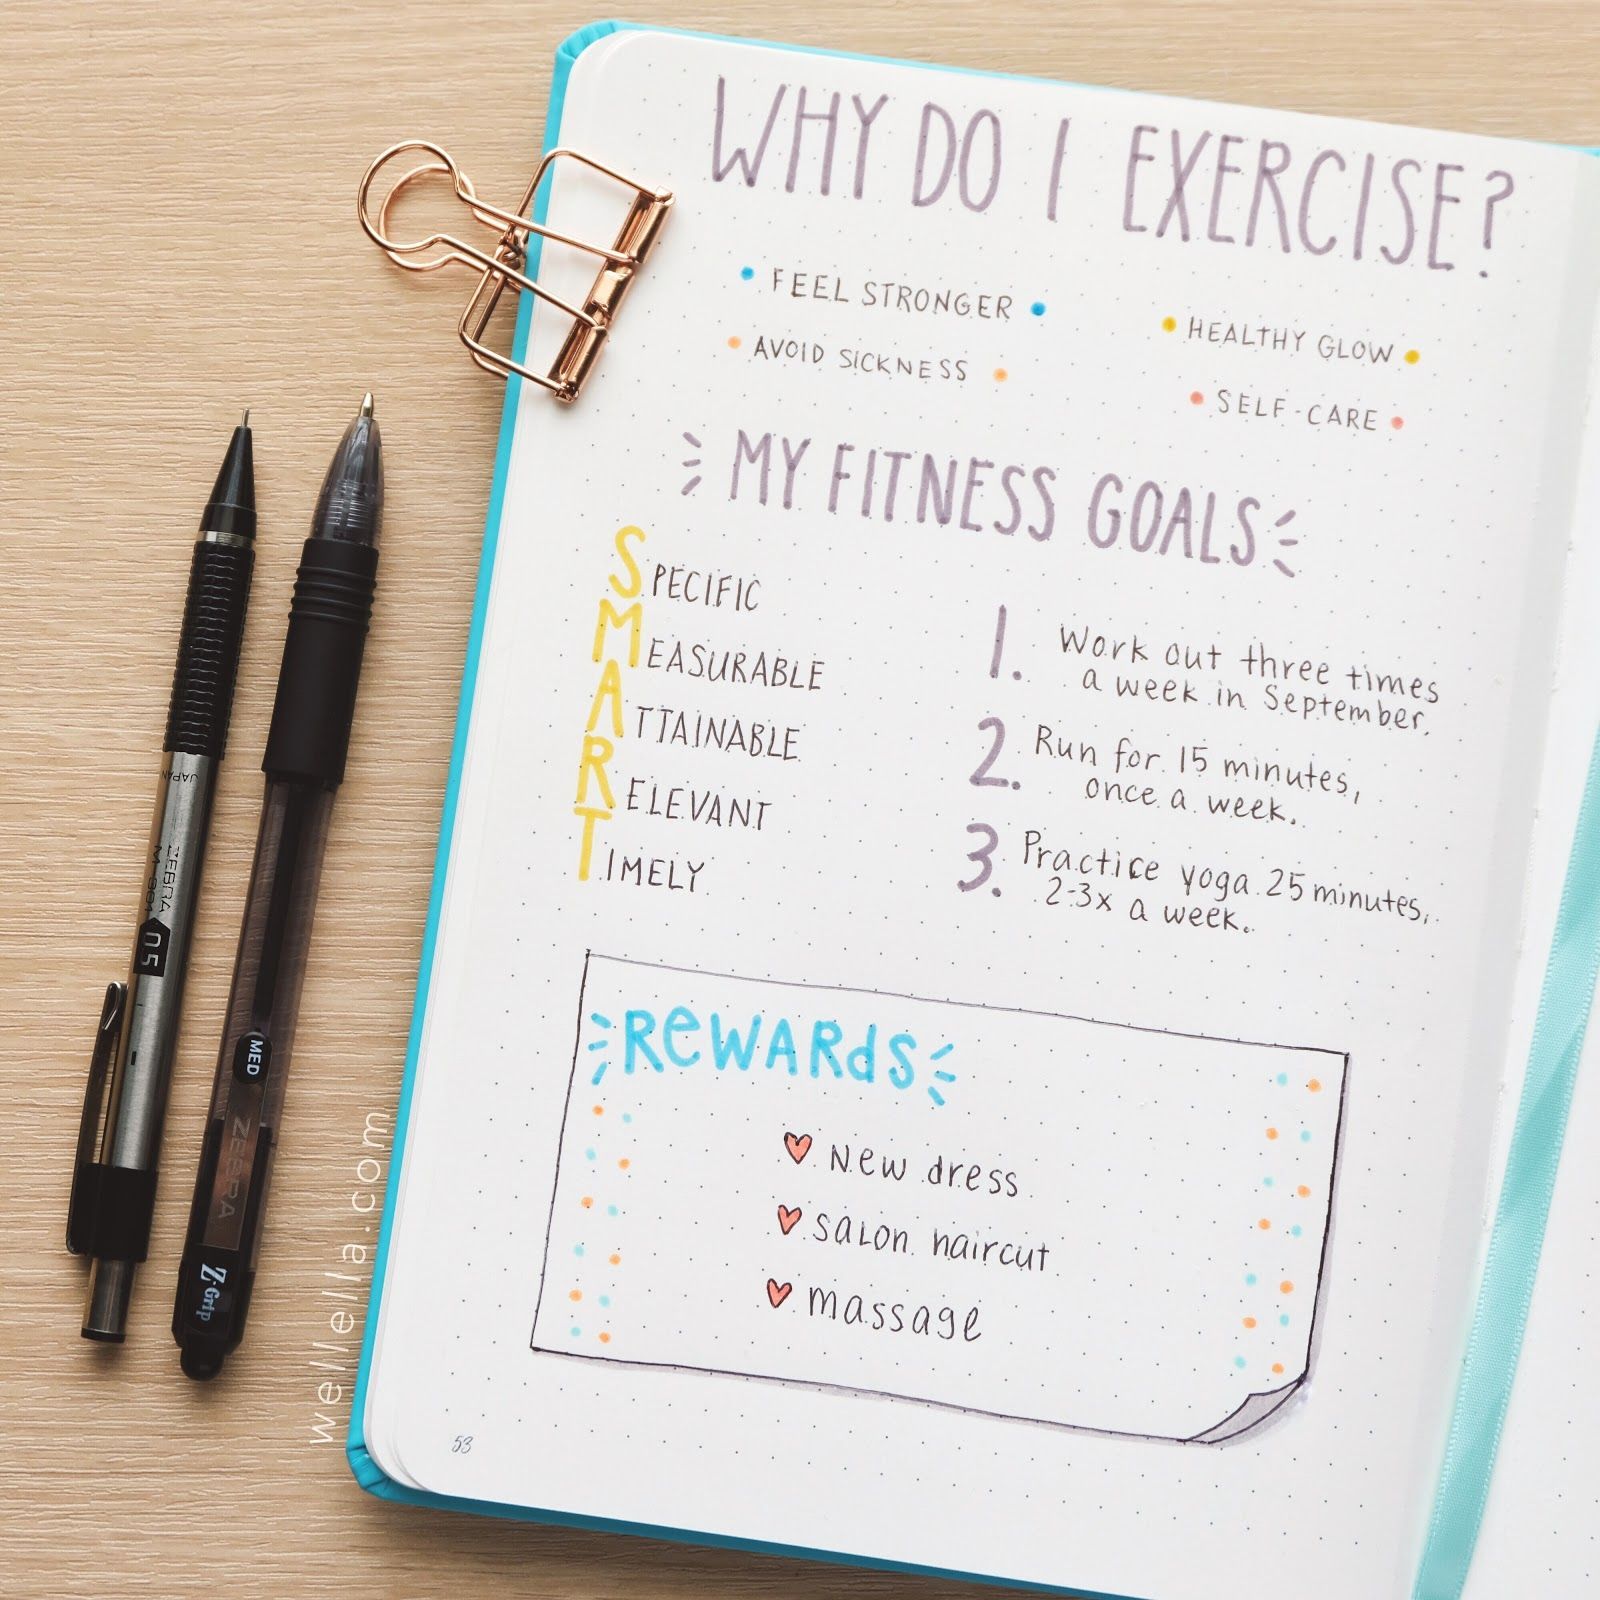 17 fitness Journal exercise ideas